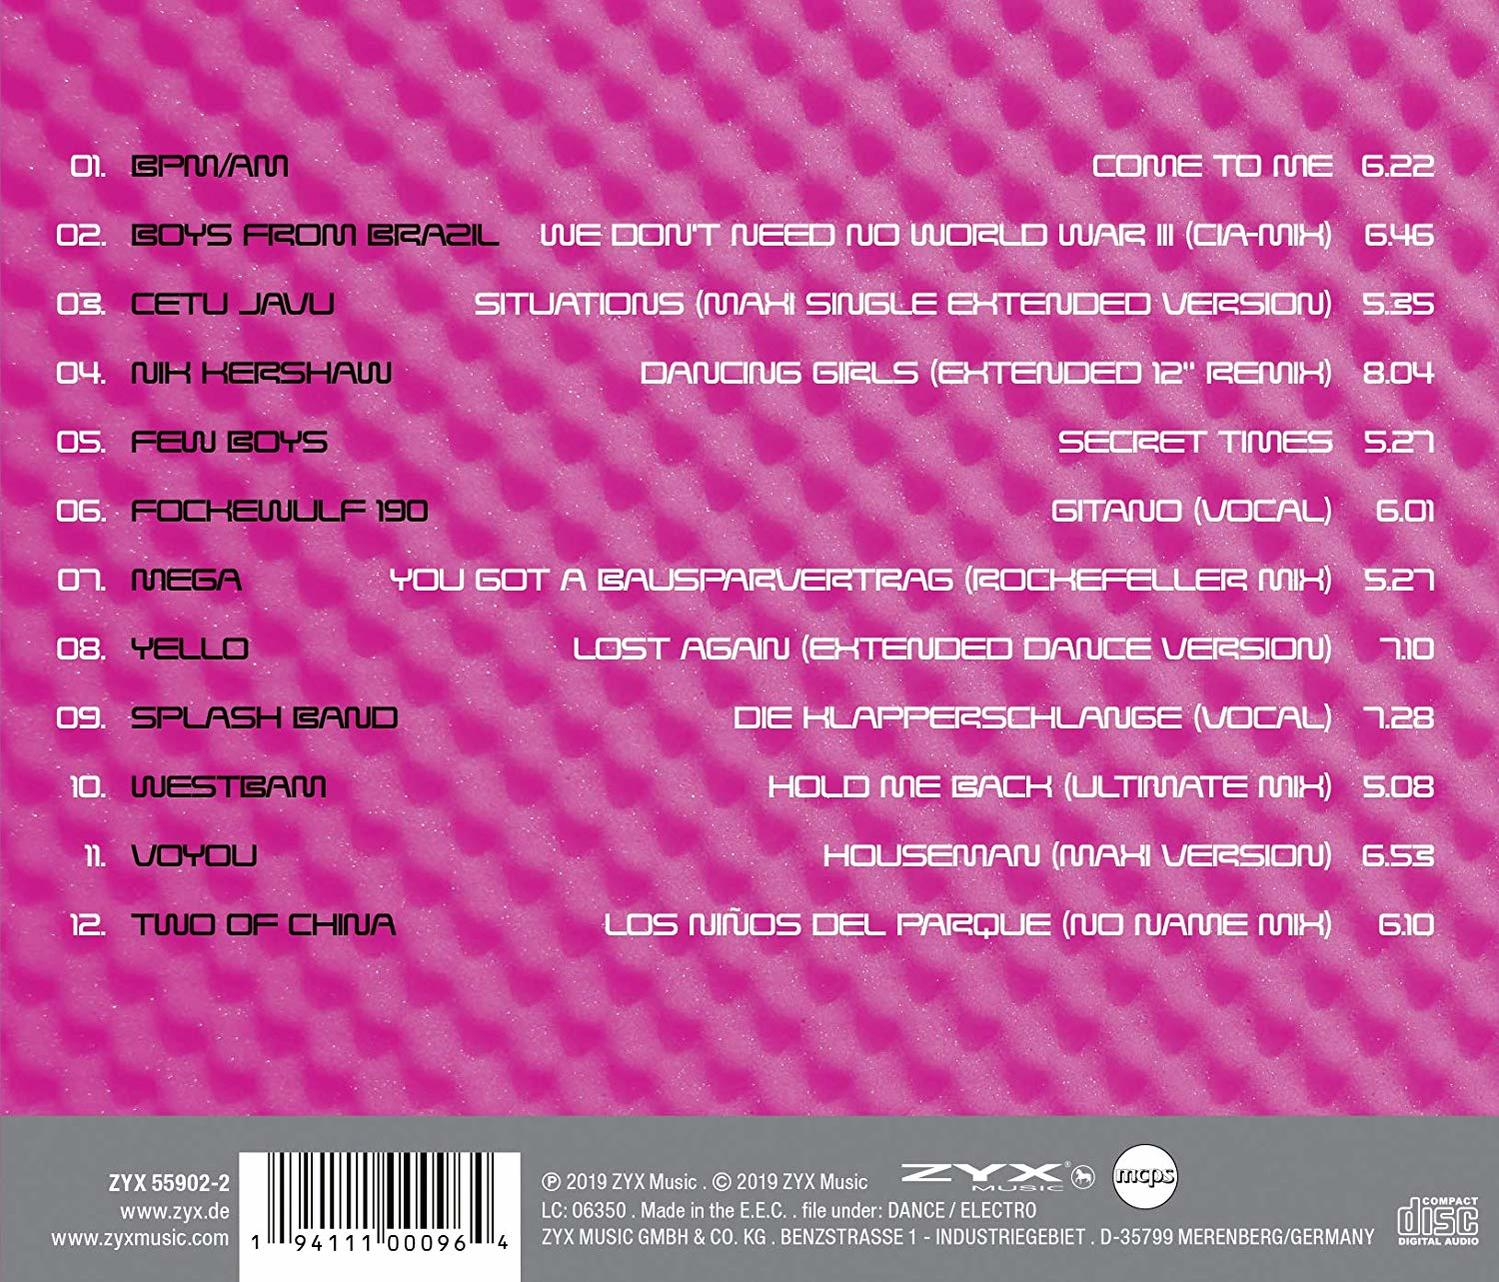 VARIOUS - 80s Electro Tracks (CD) Vol.3 